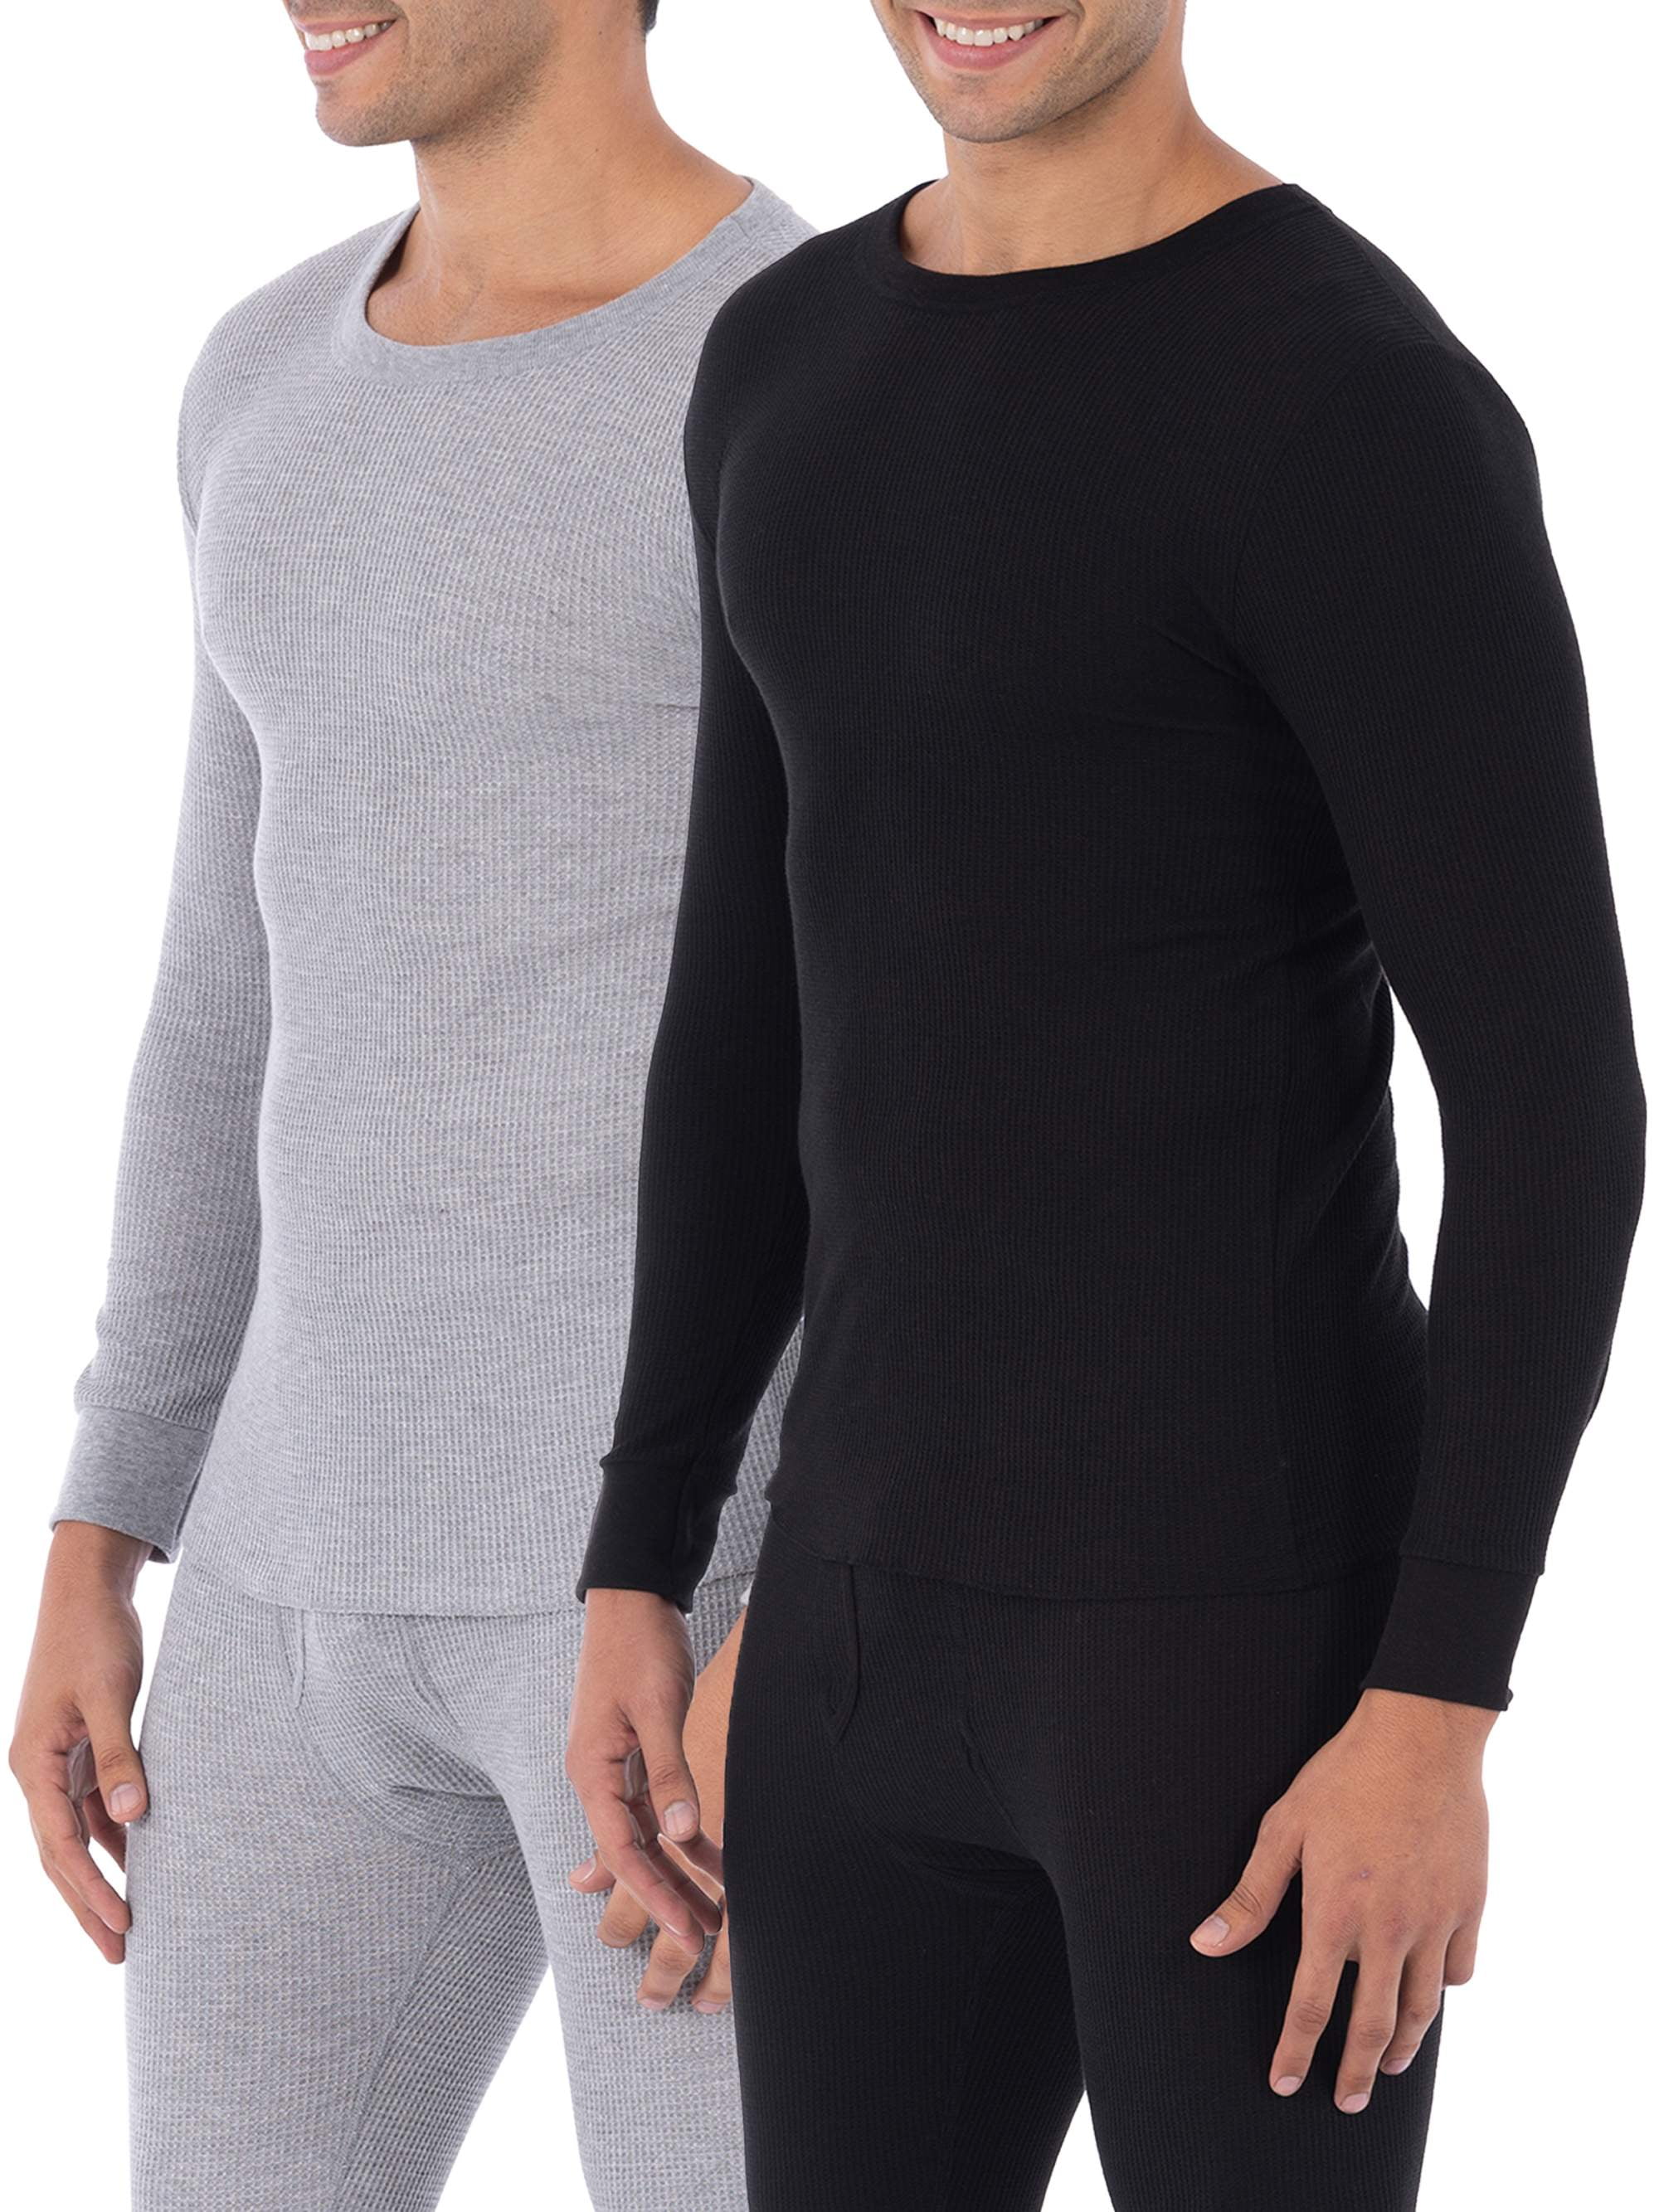 New Mens Short Sleeve Thermal Full Set Underwear Long Johns Trouser & Shirt TOP Vest Base Layer Plus Size UK 3XL 4XL 5XL